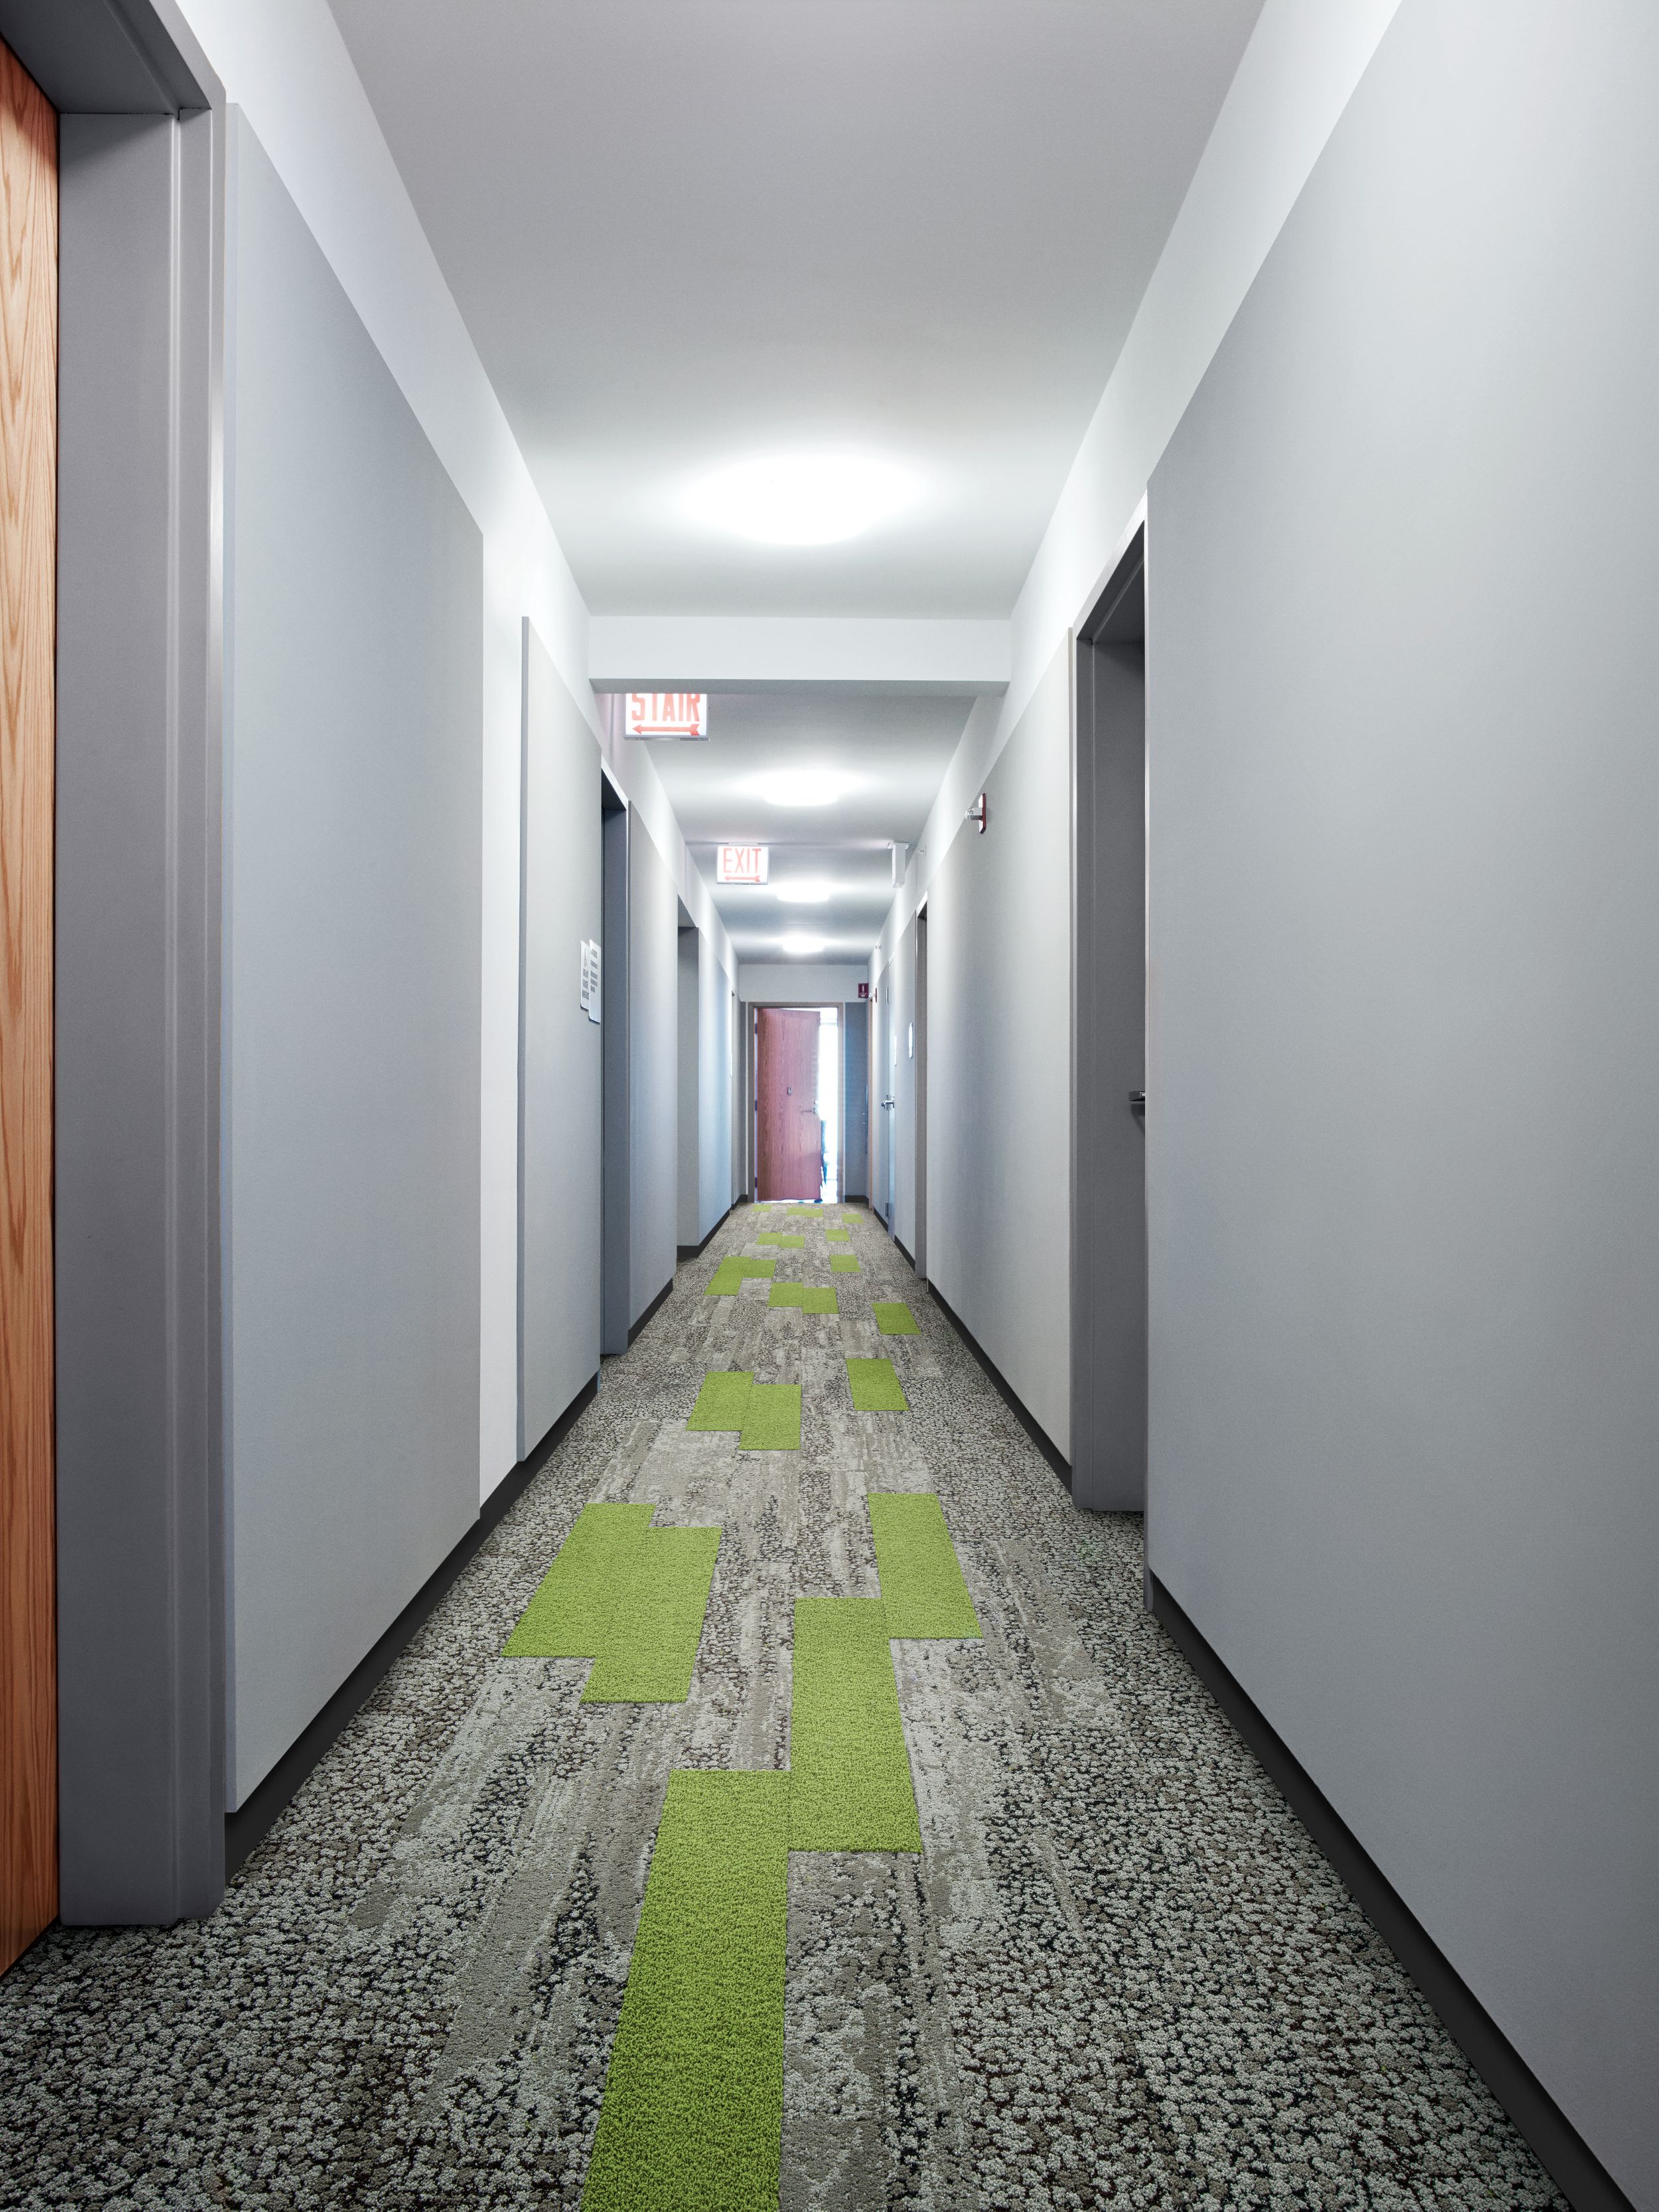 Interface HN830 and HN850 plank carpet tiles in long corridor with mutliple doors and wood door at end imagen número 7